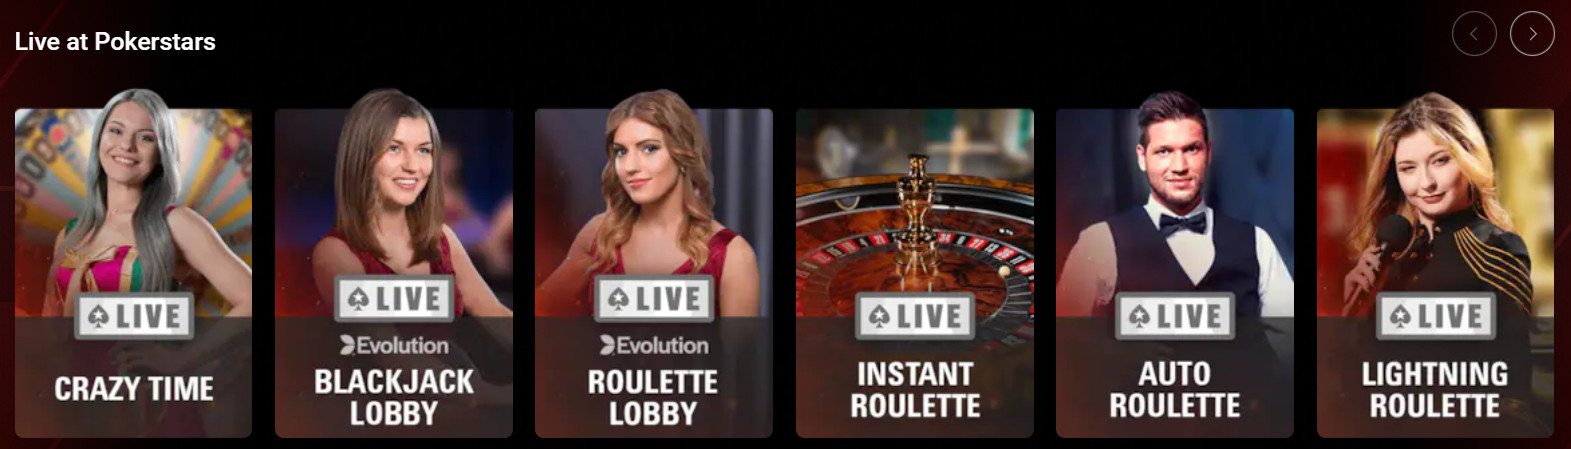 Live Dealer Games at PokerStars Casino